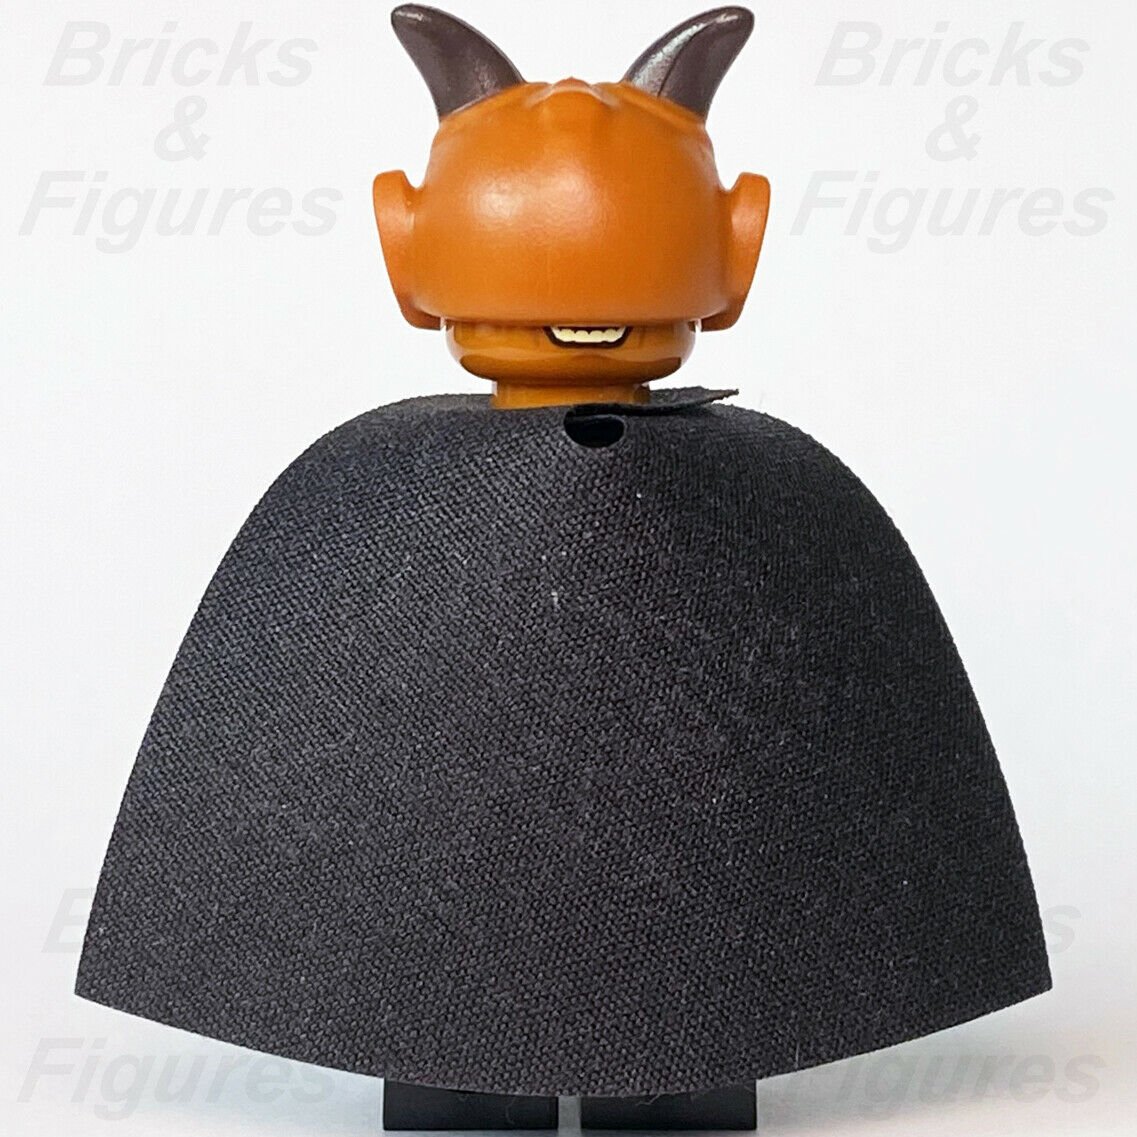 Star Wars LEGO Labria (Kardue'sai'Malloc) Spy A New Hope Minifigure 75290 - Bricks & Figures